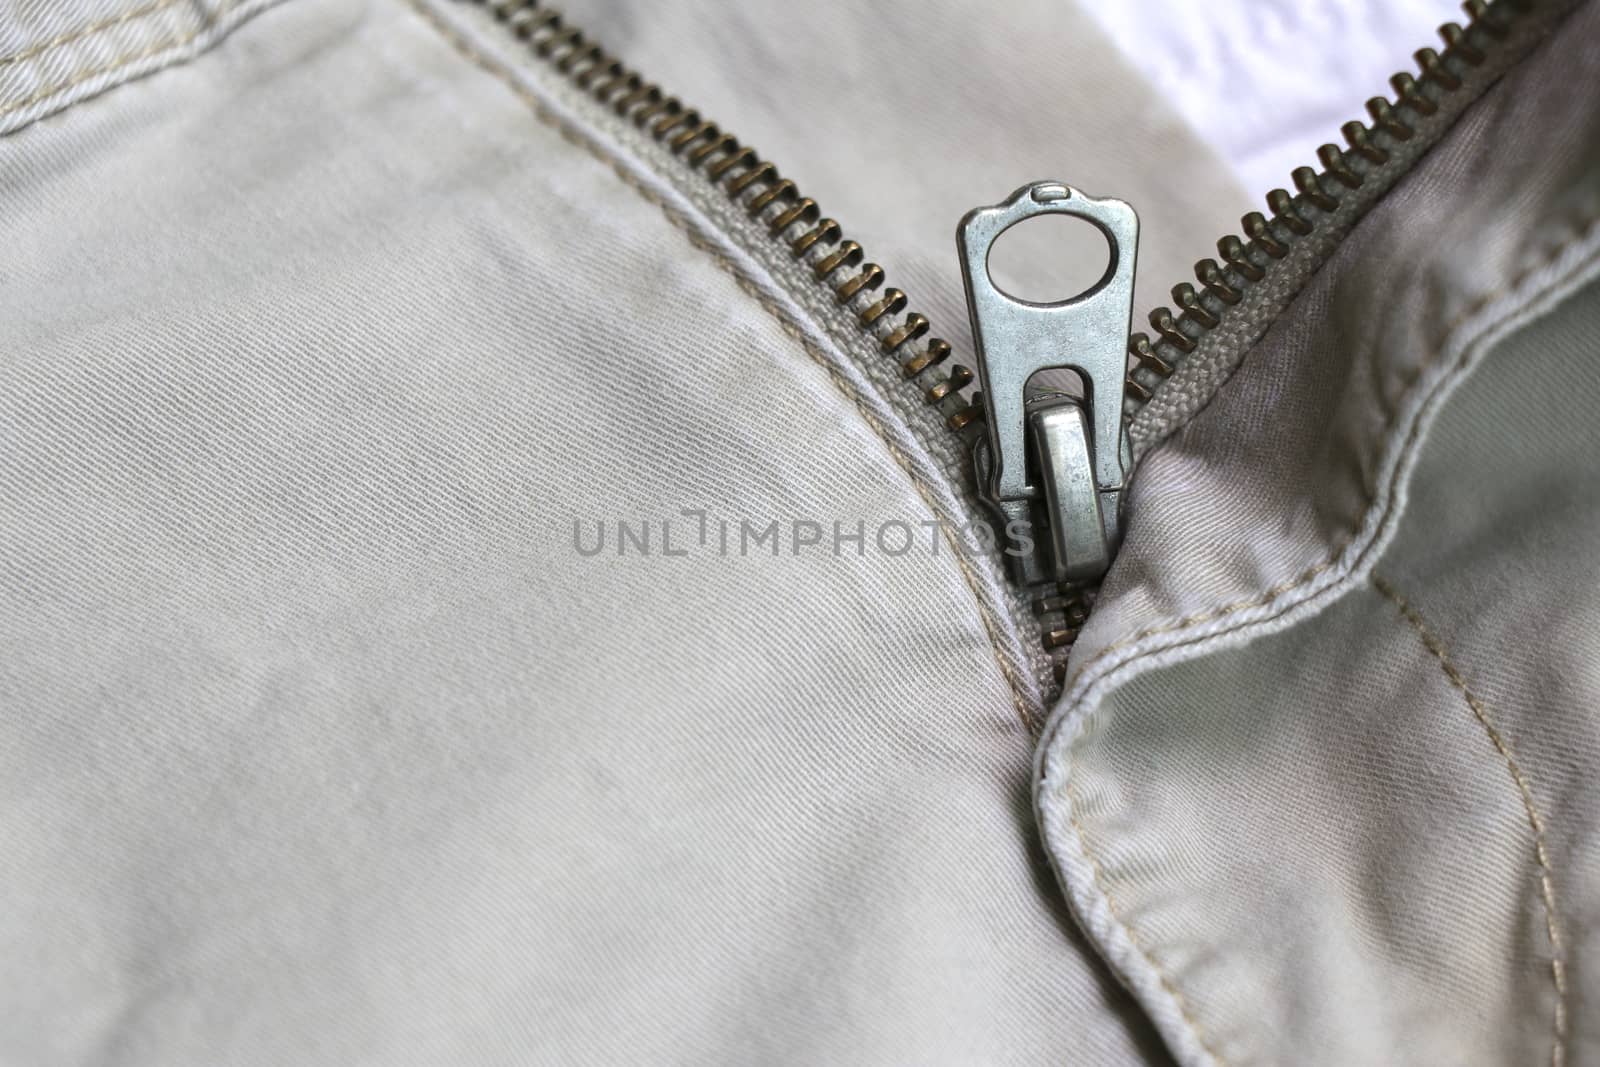 The zipper of the pants that opened. Metal zipper of cream pants.